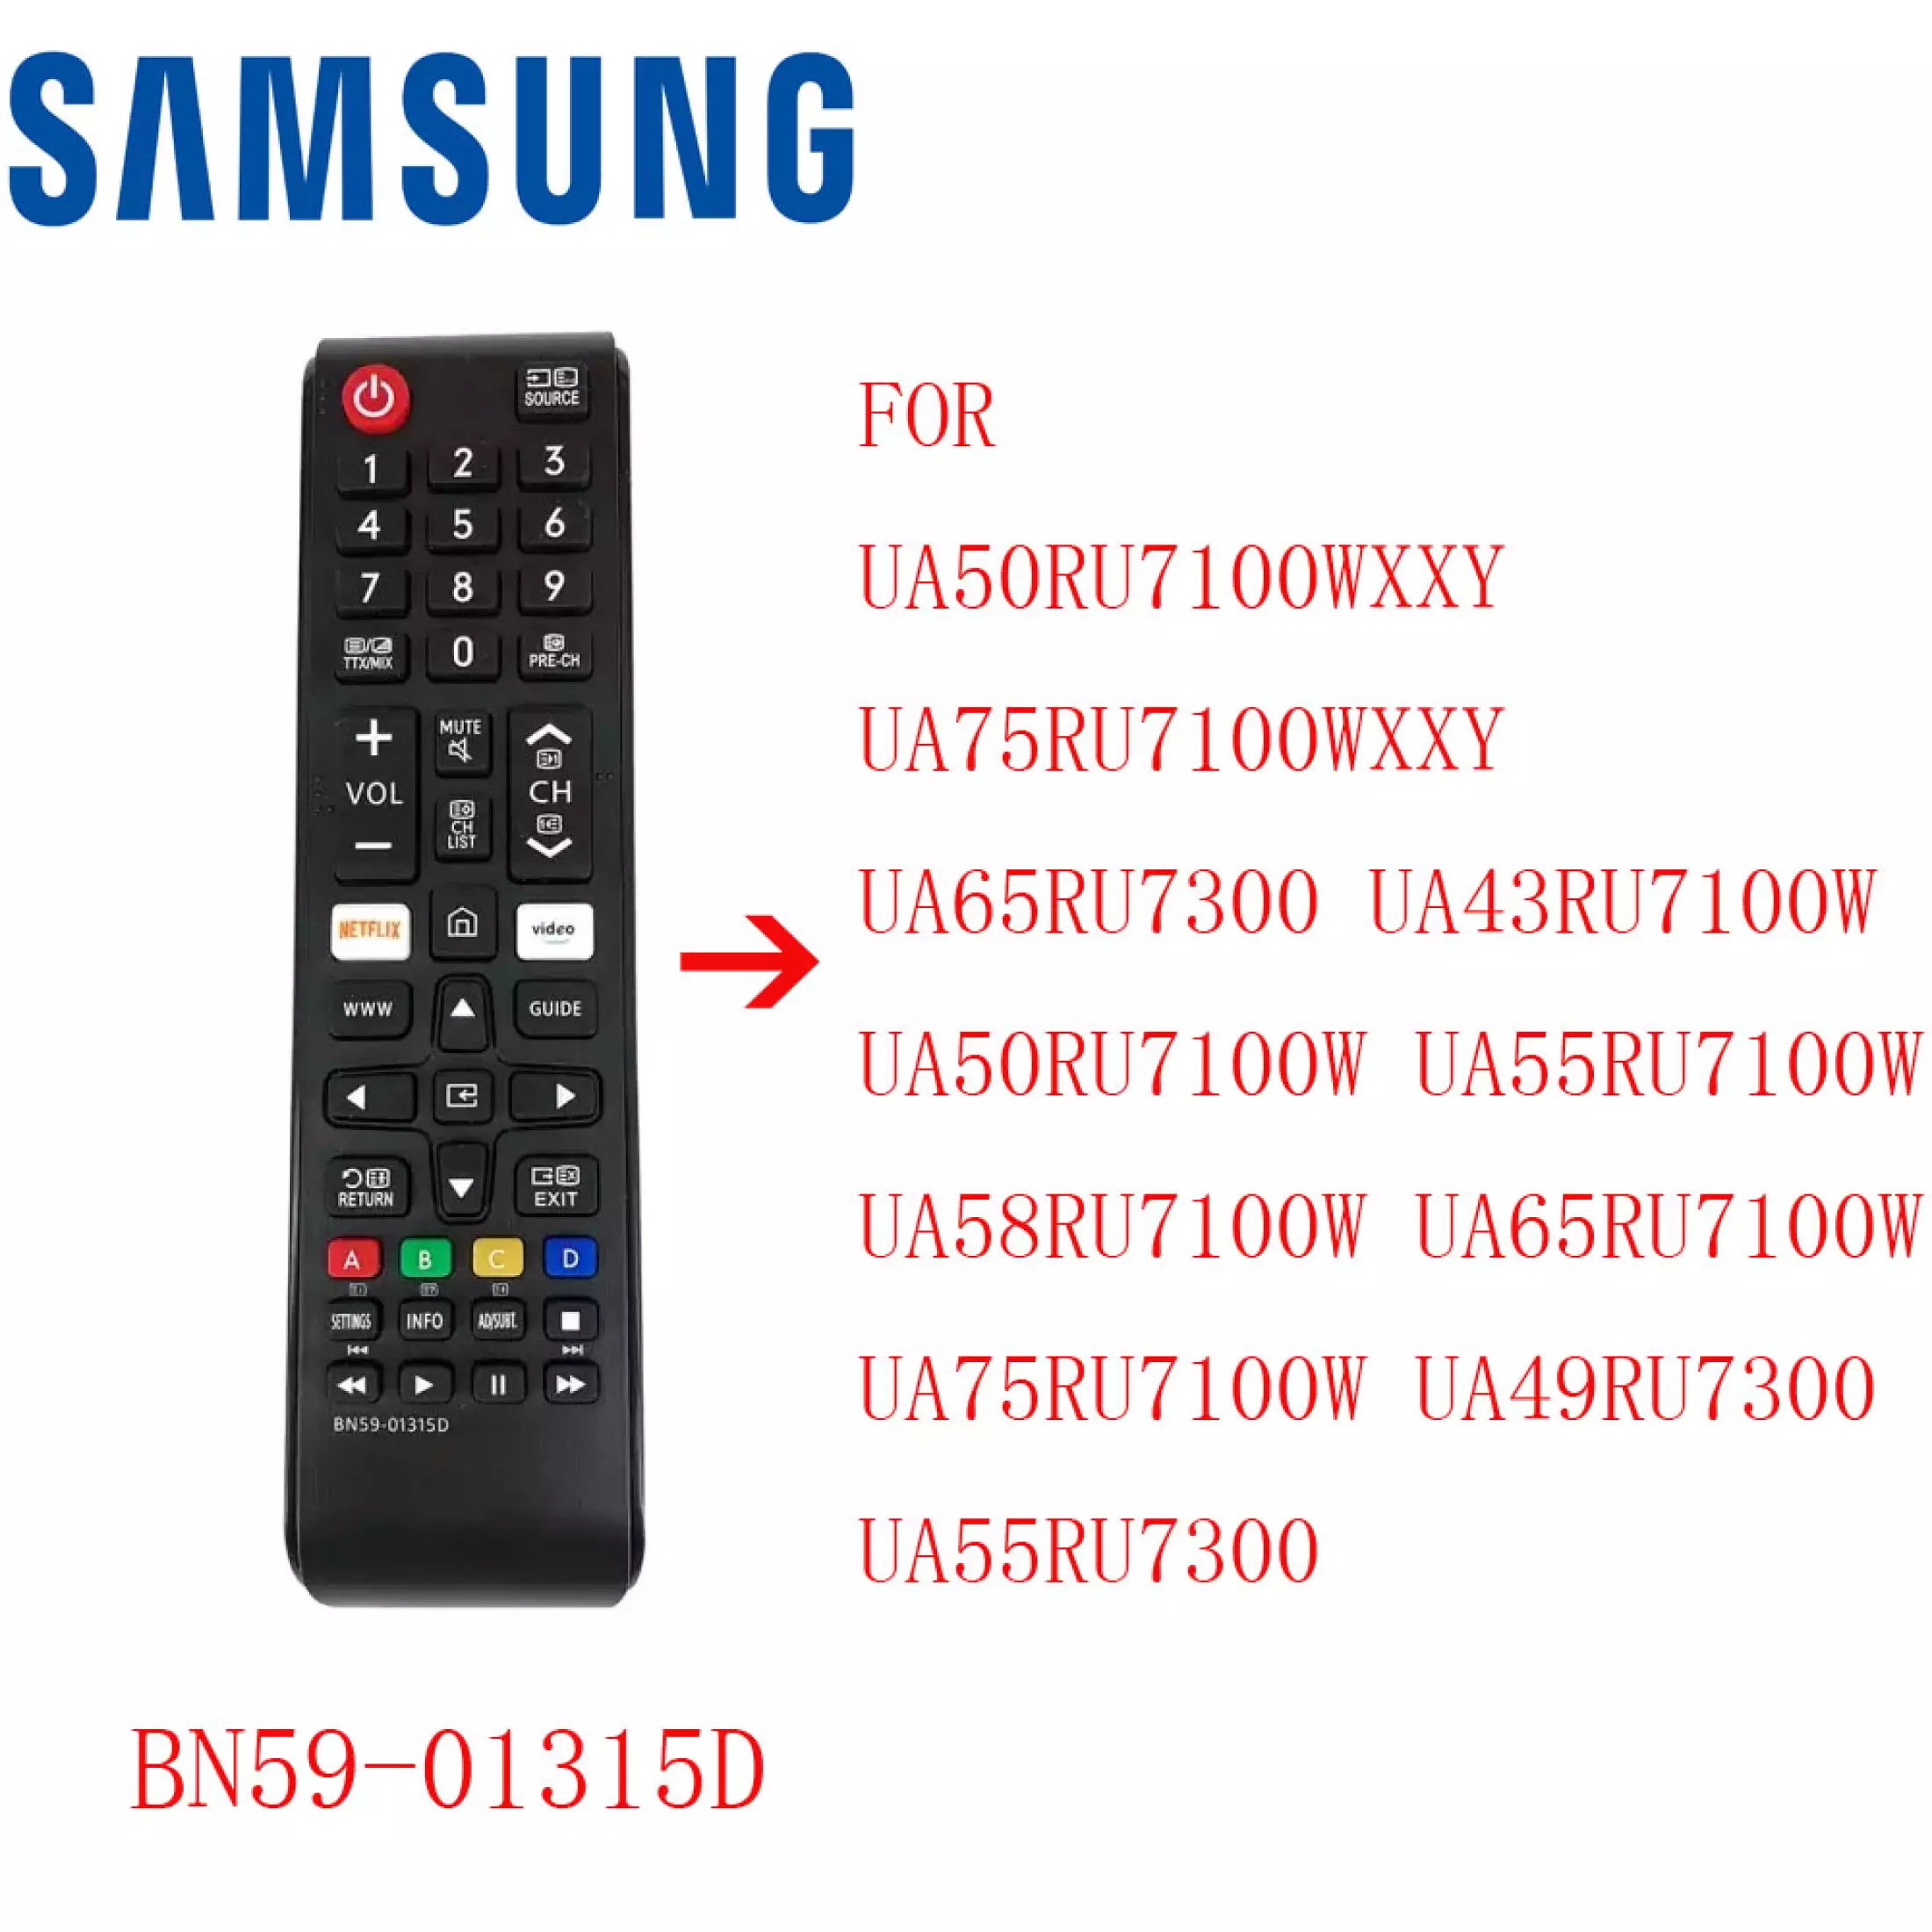 Samsung Smart Tv Remote Control Bn59 01315d For Samsung Led Tv Remote Control Bn5901315d Ua50ru7100wxxy Ua75ru7100wxxy Ua65ru7300 Ua43ru7100w Ua50ru7100w Ua55ru7100w Ua58ru7100w Ua65ru7100w Ua75ru7100w Ua49ru7300 Ua55ru7300 Lazada Ph